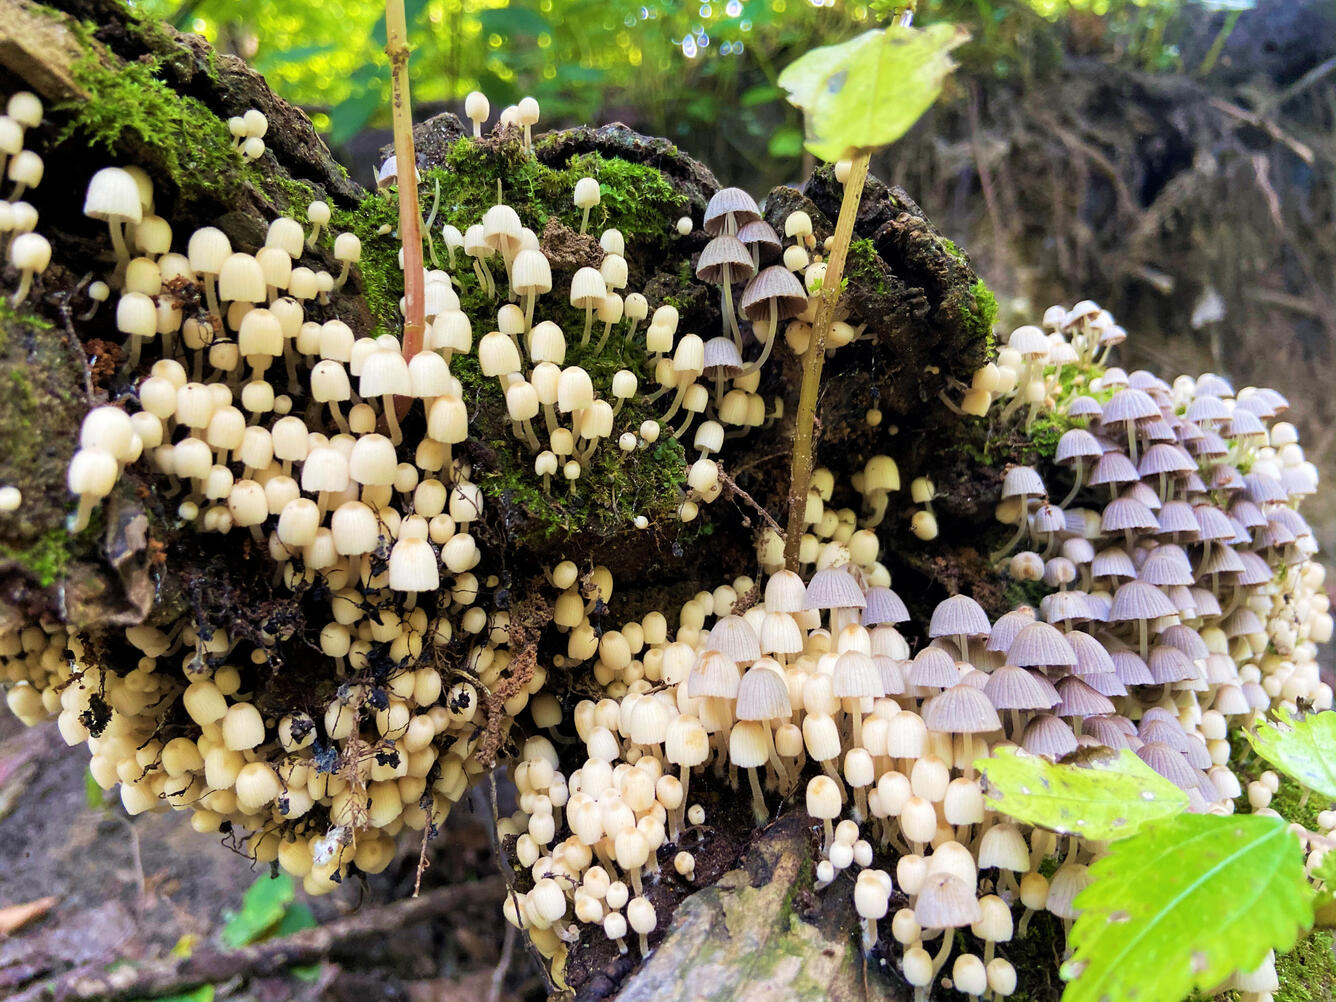 Fungi on a Decomposing Log